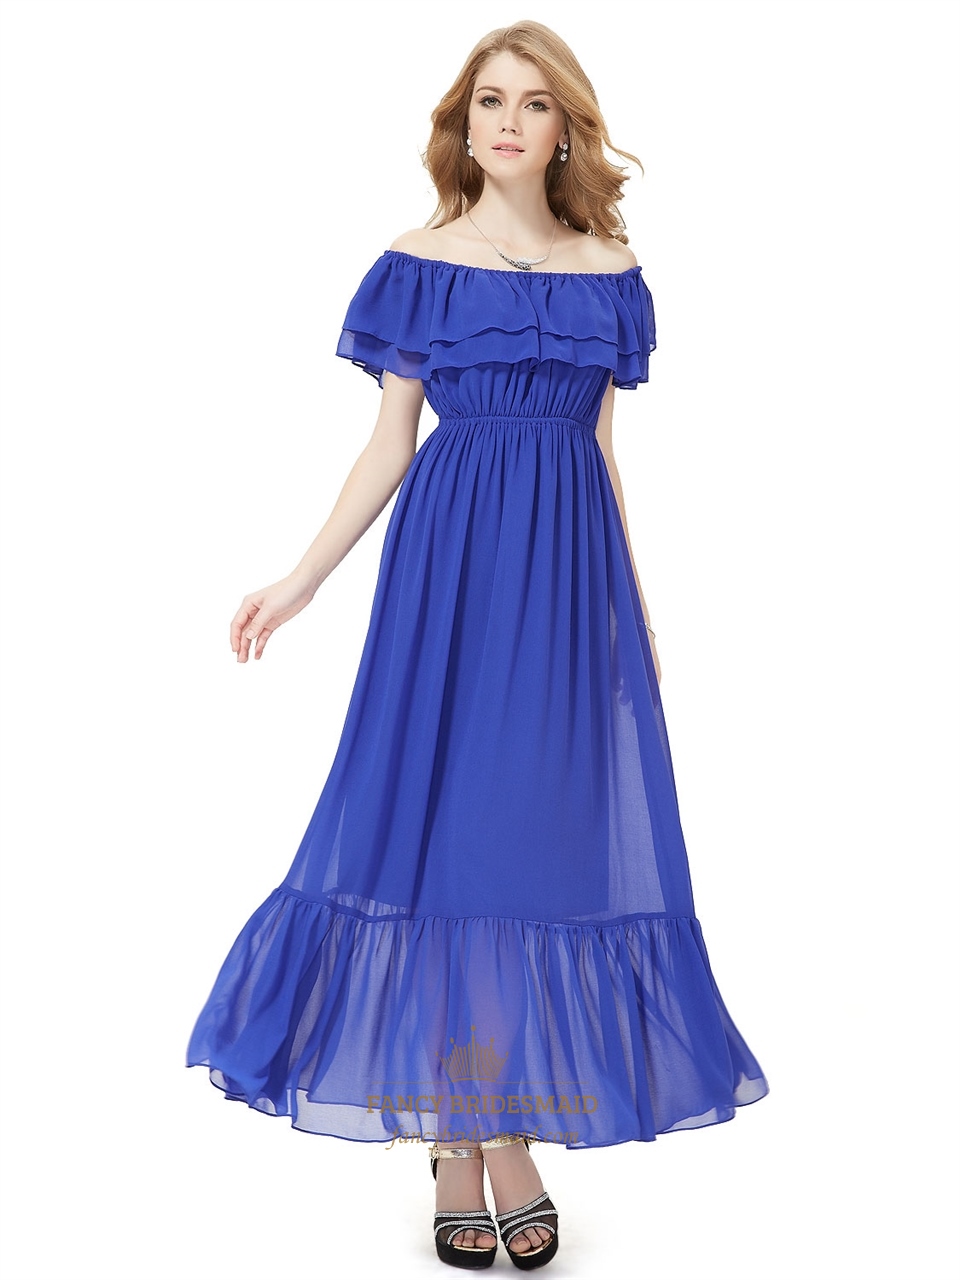 Blue Shoulder Dress - Fashion Outlet Review